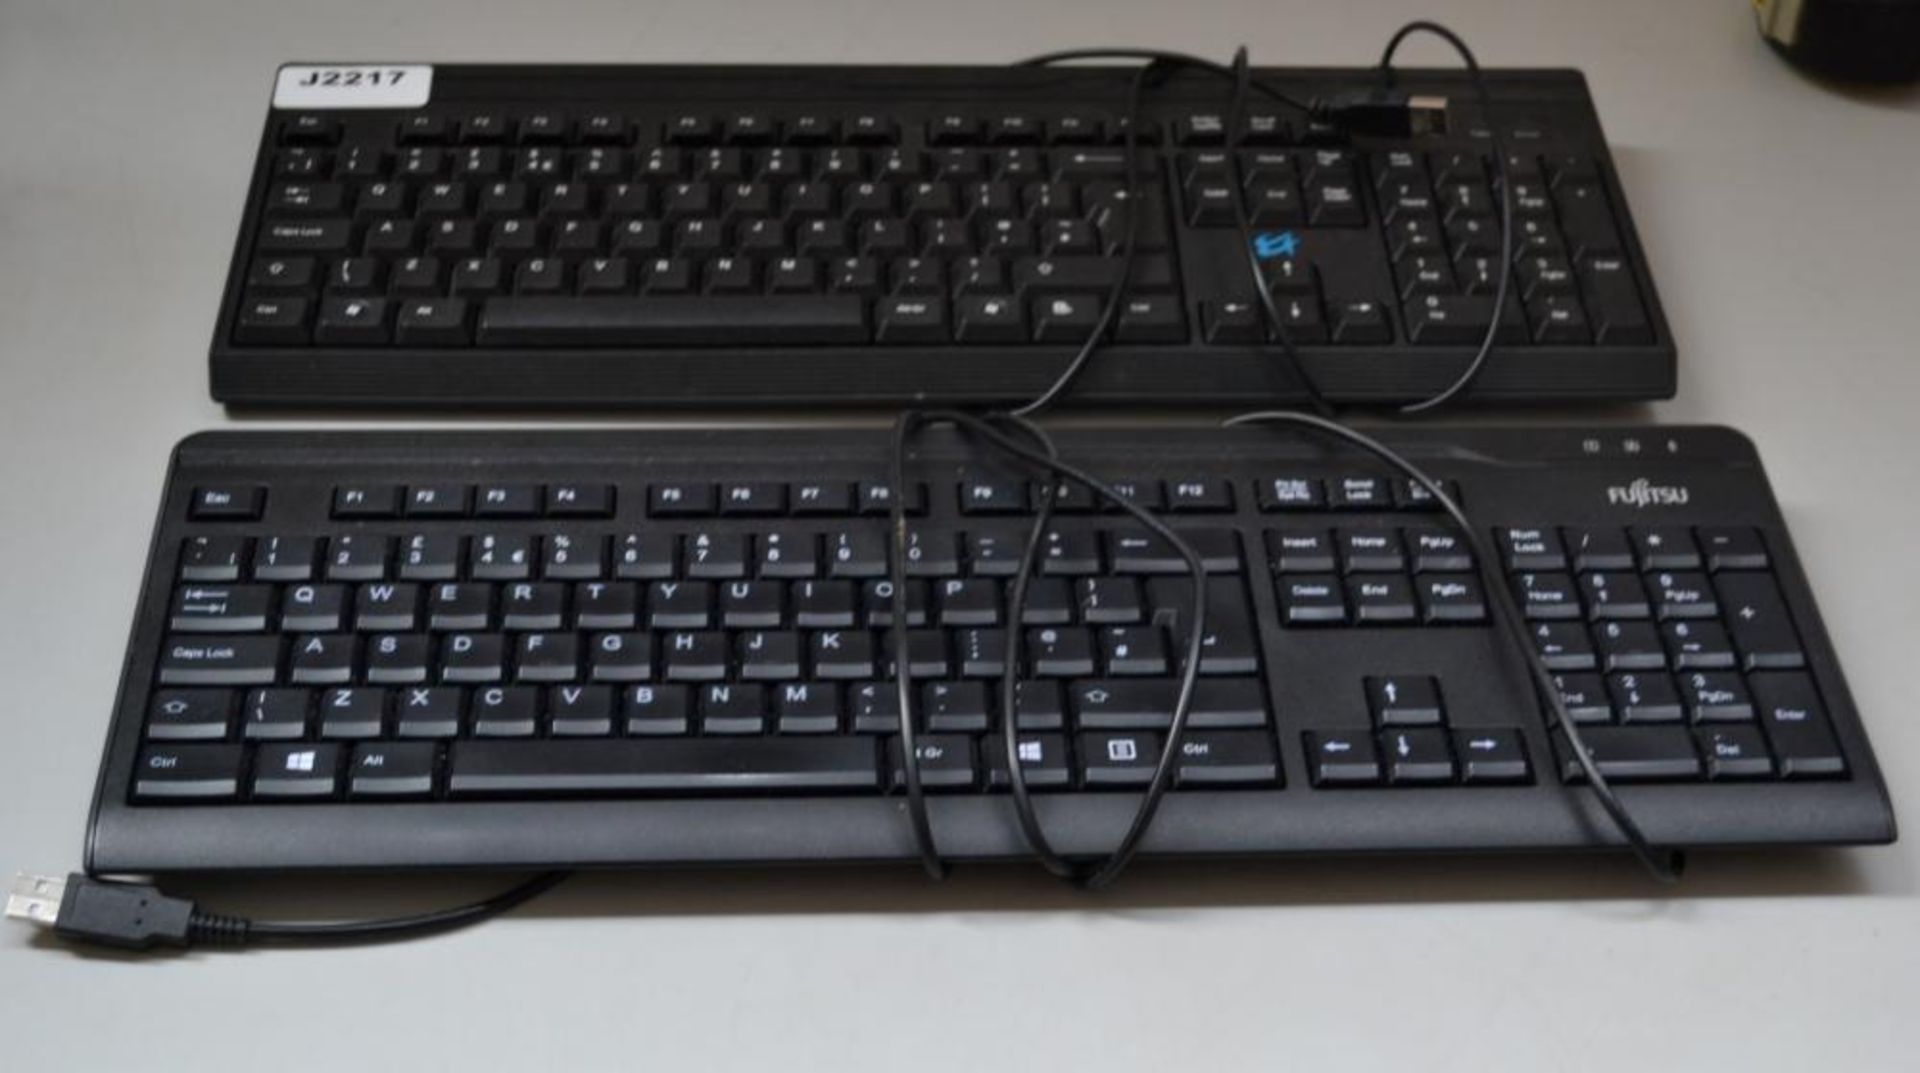 3 x Computer Keyboards (2 x Fujitsu, 1 x Computergear) - Ref J2217 - CL394 - Location: Altrincham WA